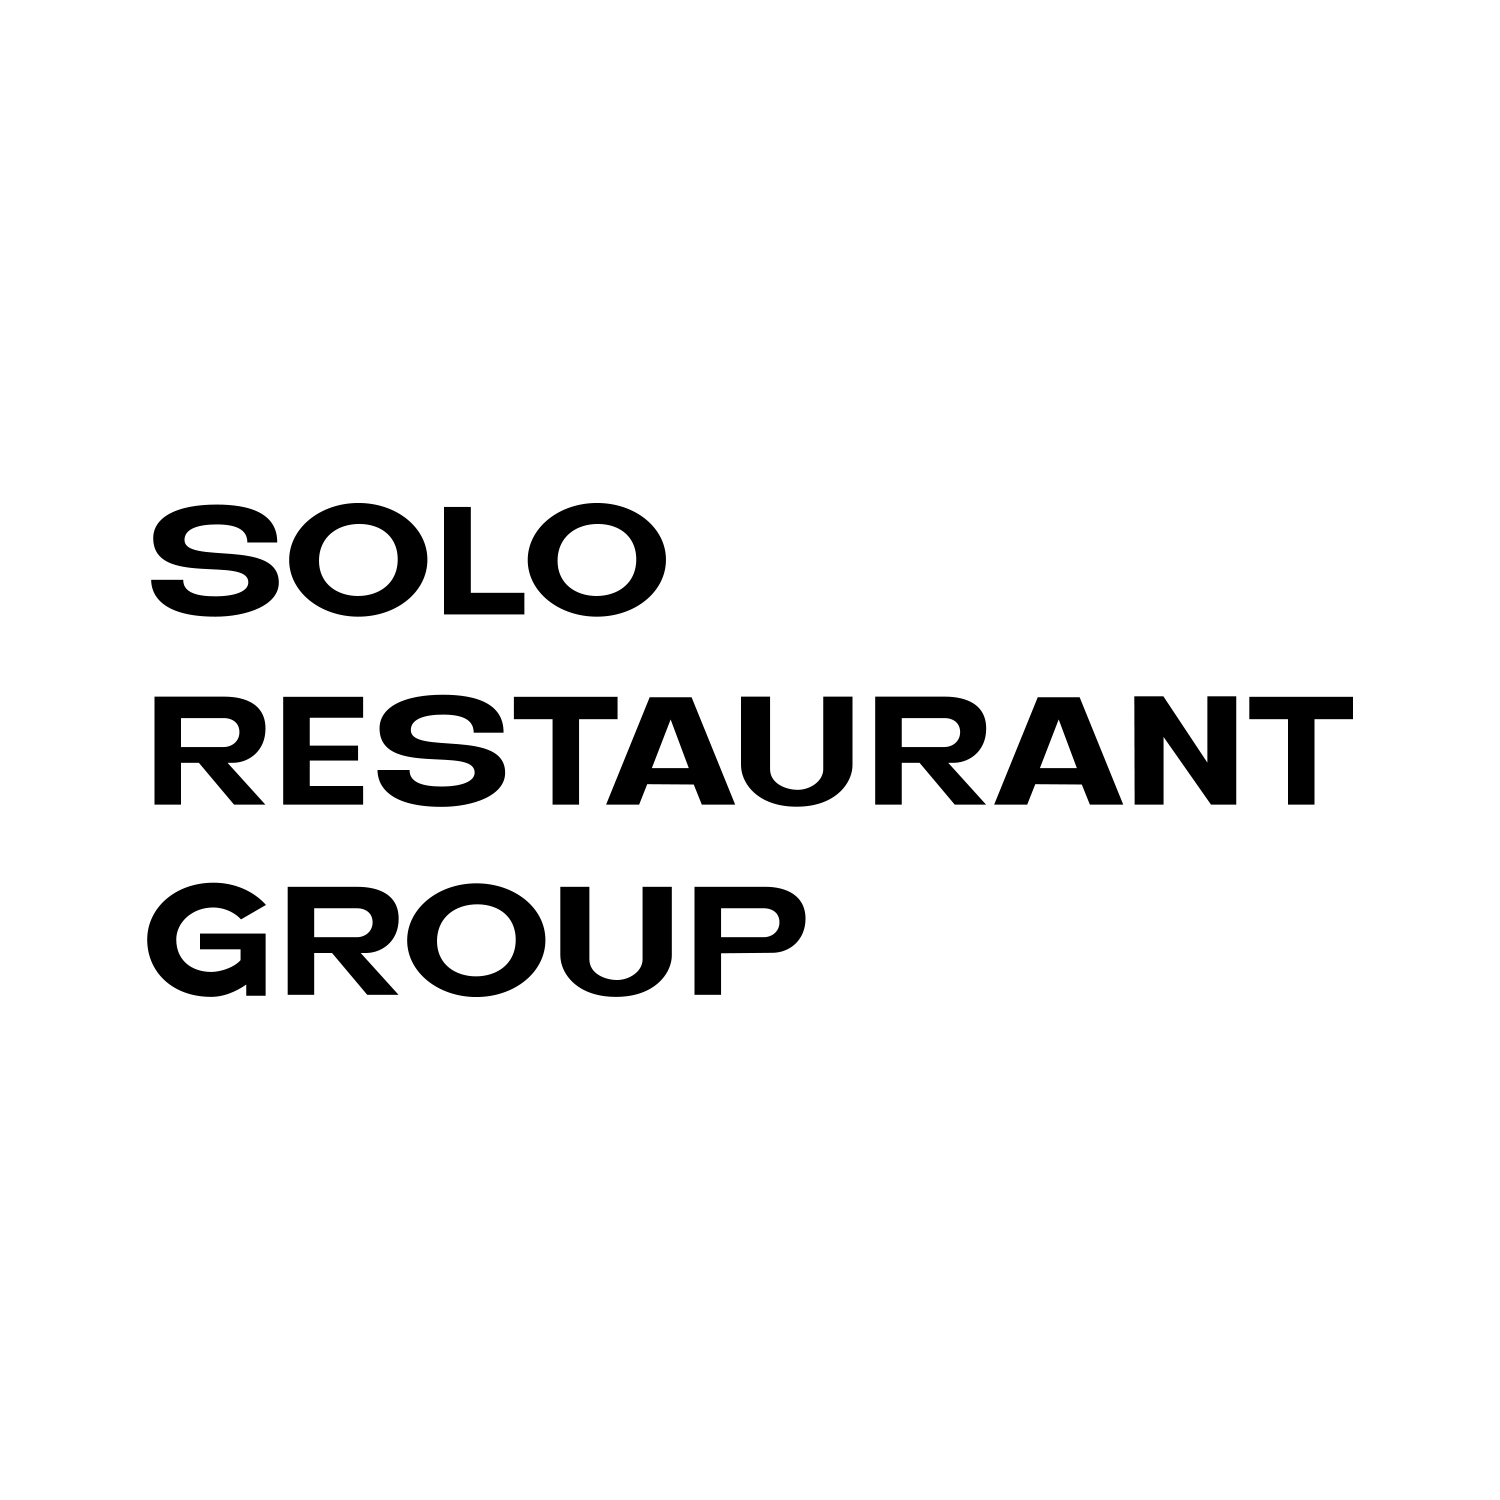 Solo Restaurant Group